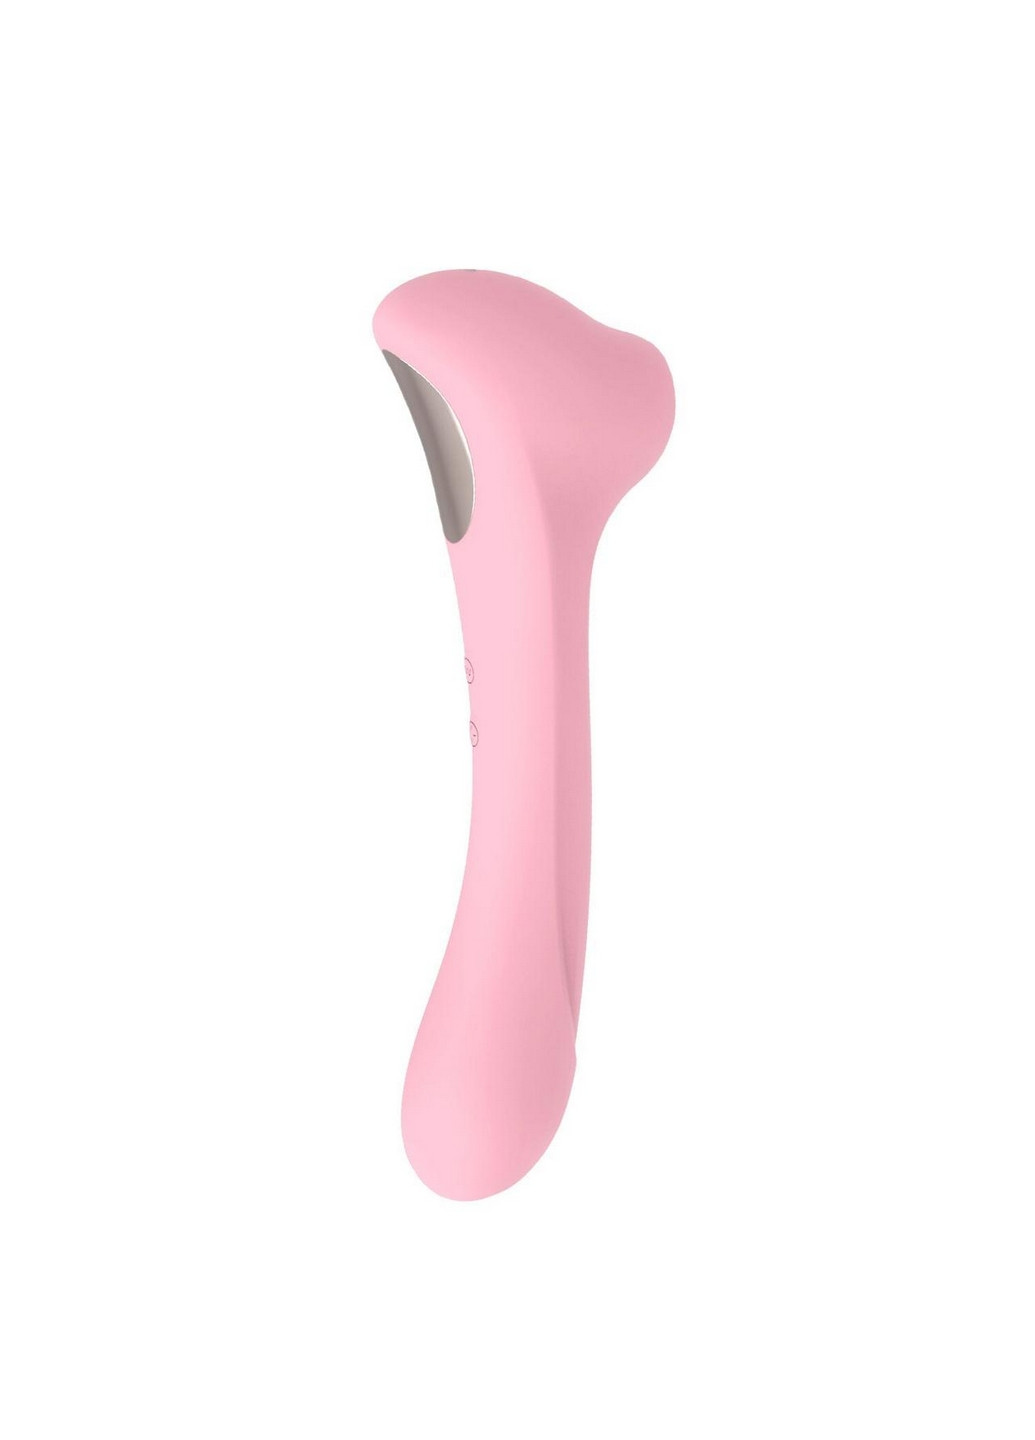 Вакуумный клиторальный стимулятор Femintimate Daisy Massager Pink No Brand (260413937)